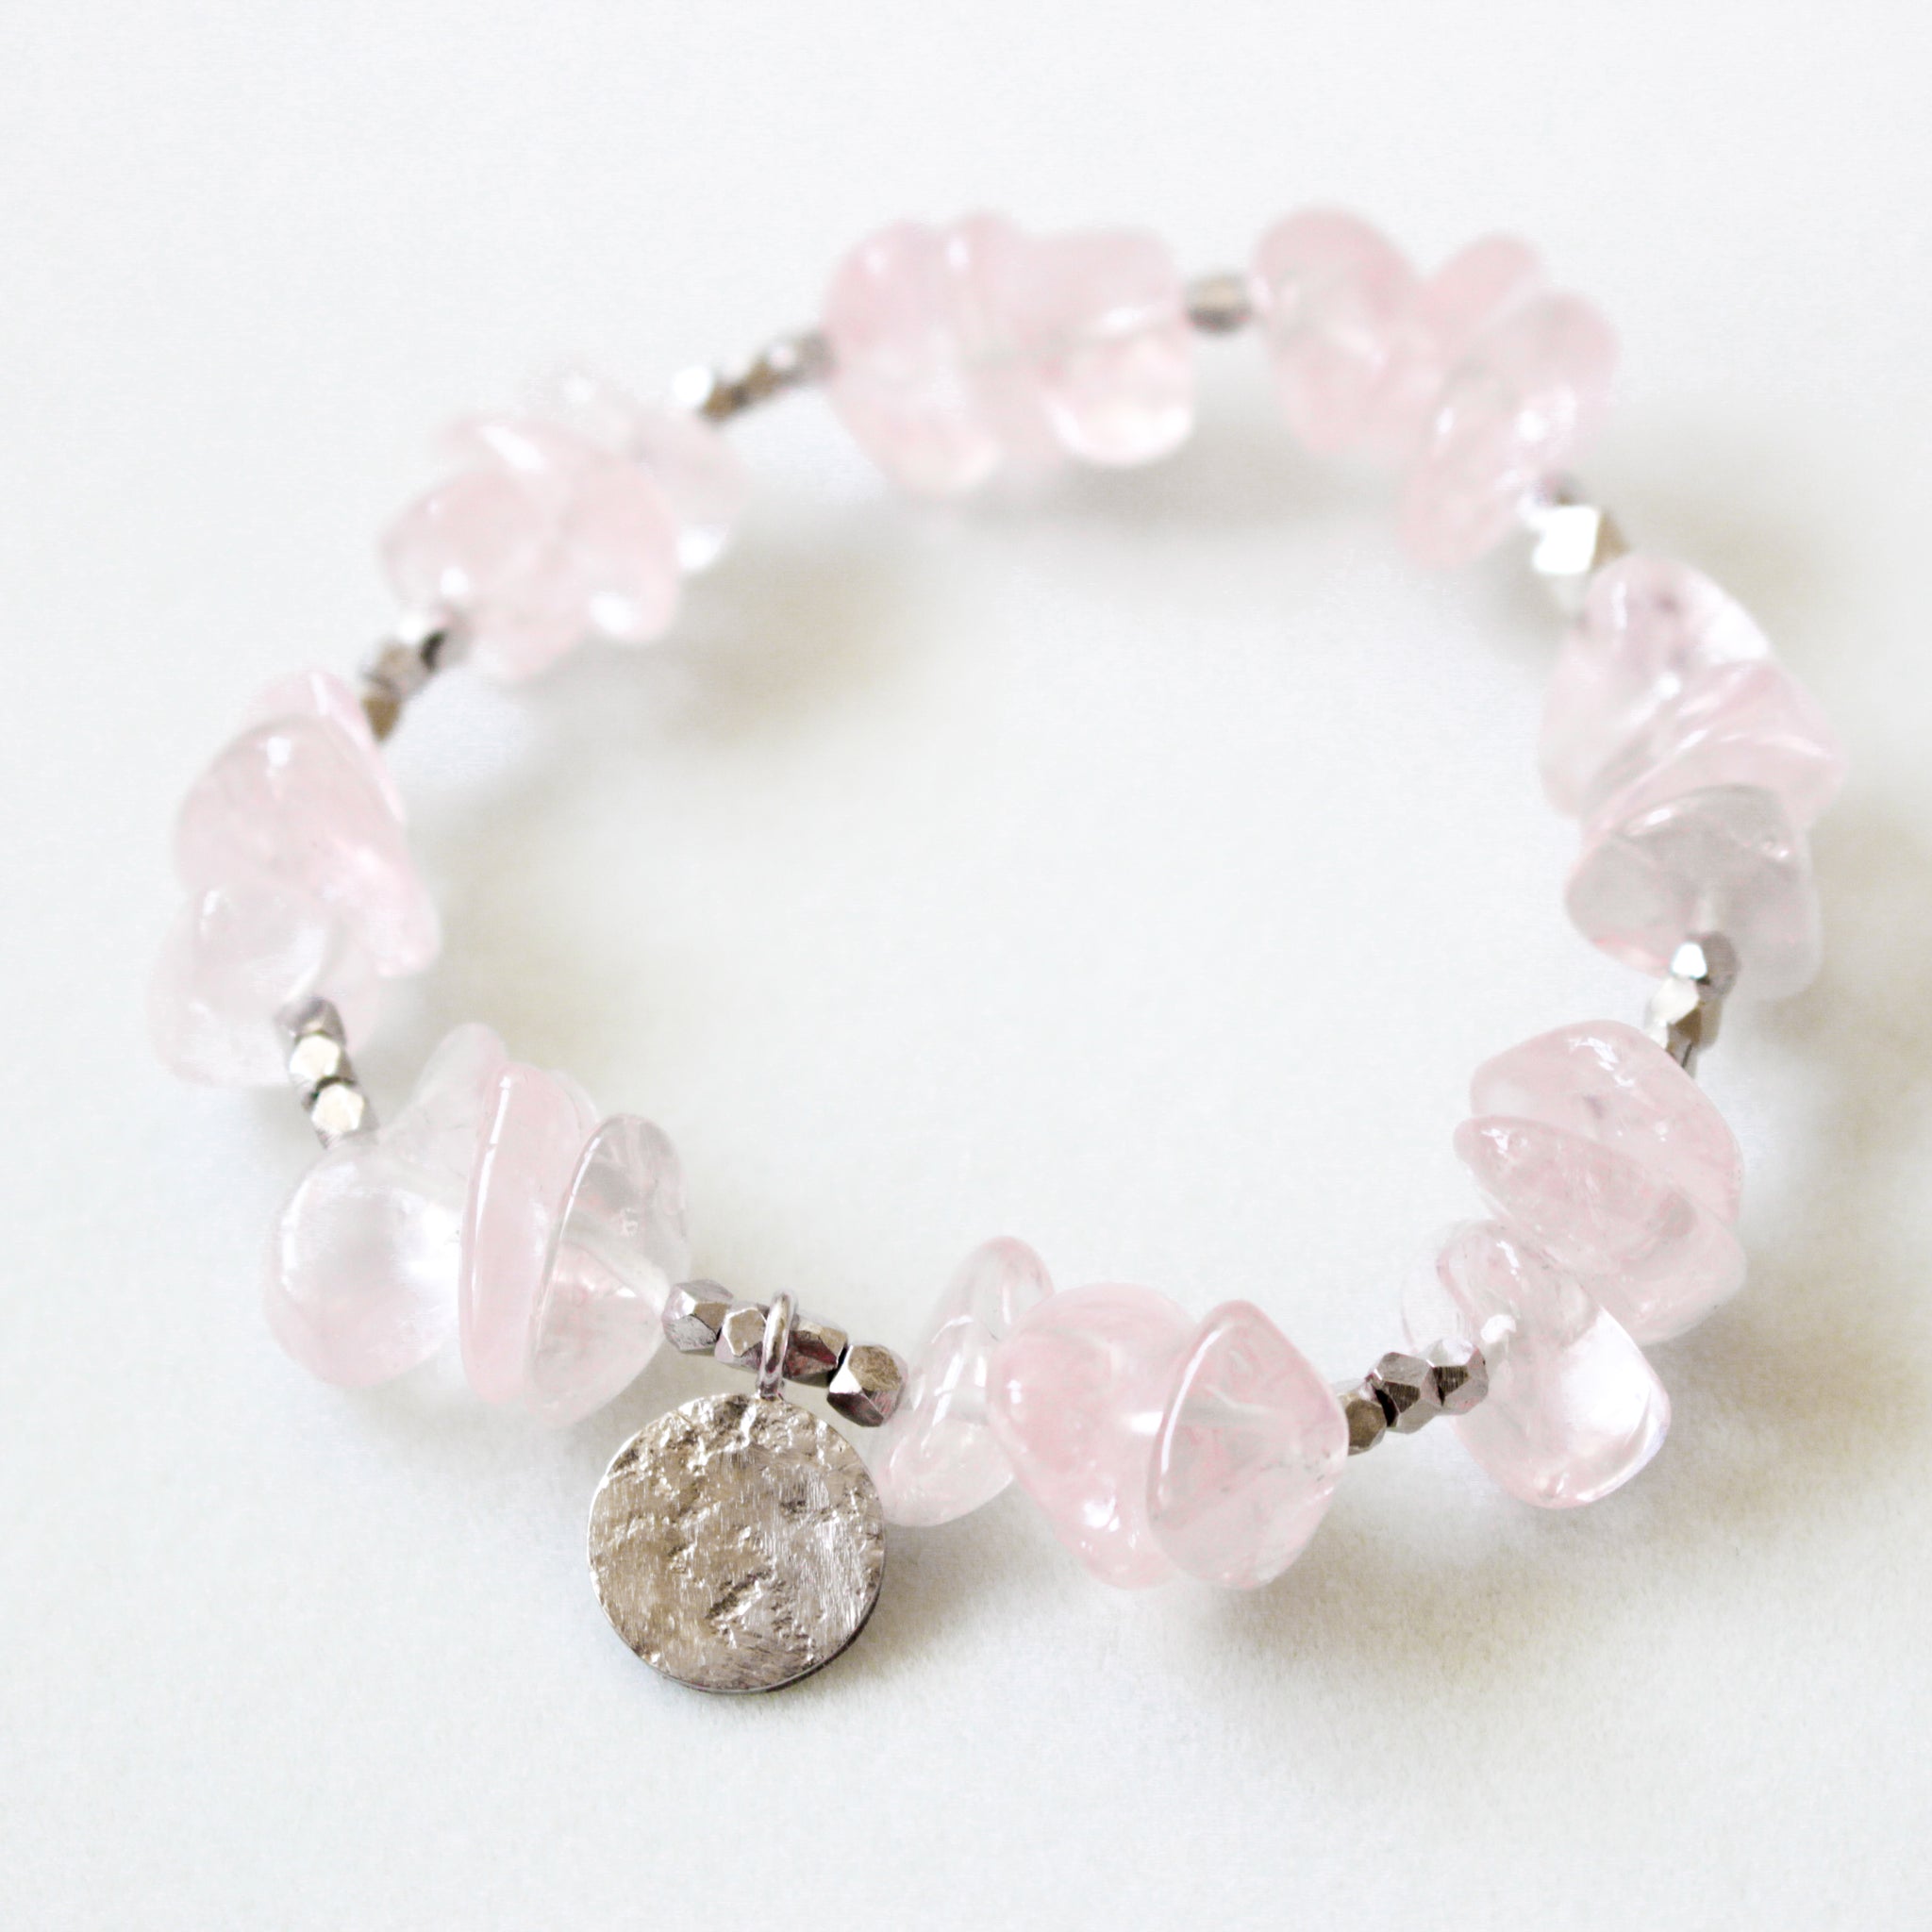 Make A Wish Bracelet - Rose Quartz with Engraved Silver Charm Elastic Bracelet